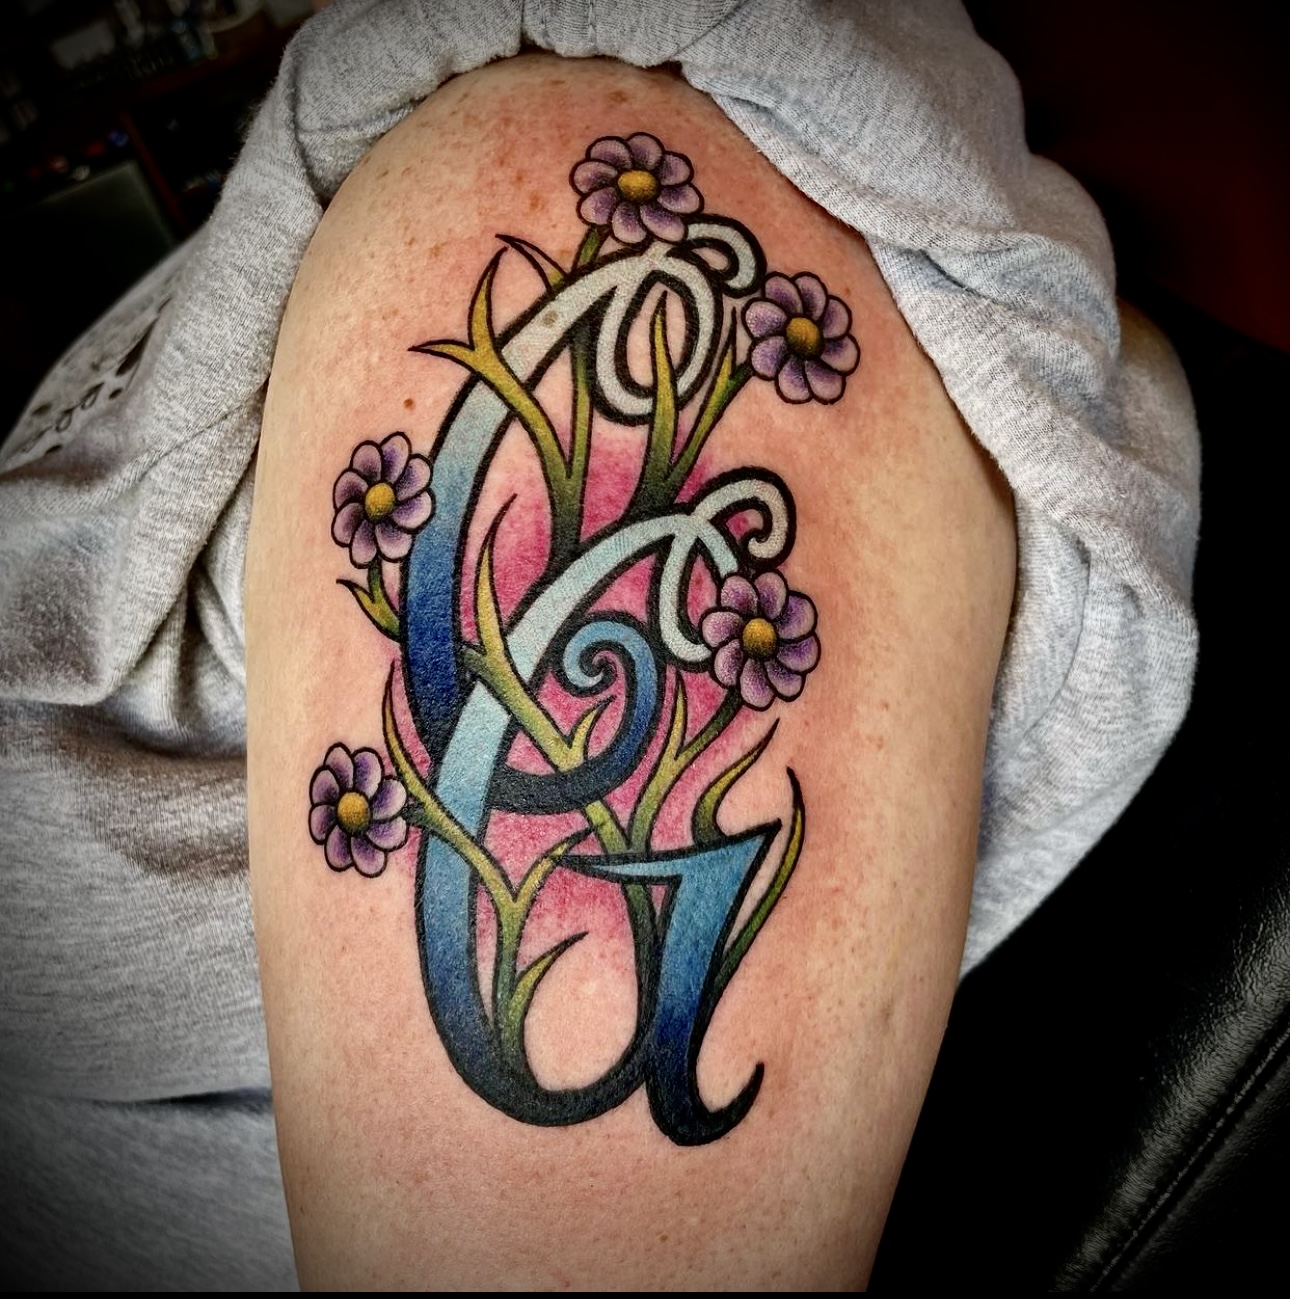 Tattoo of initials and flowers from Dallas tattoo artist